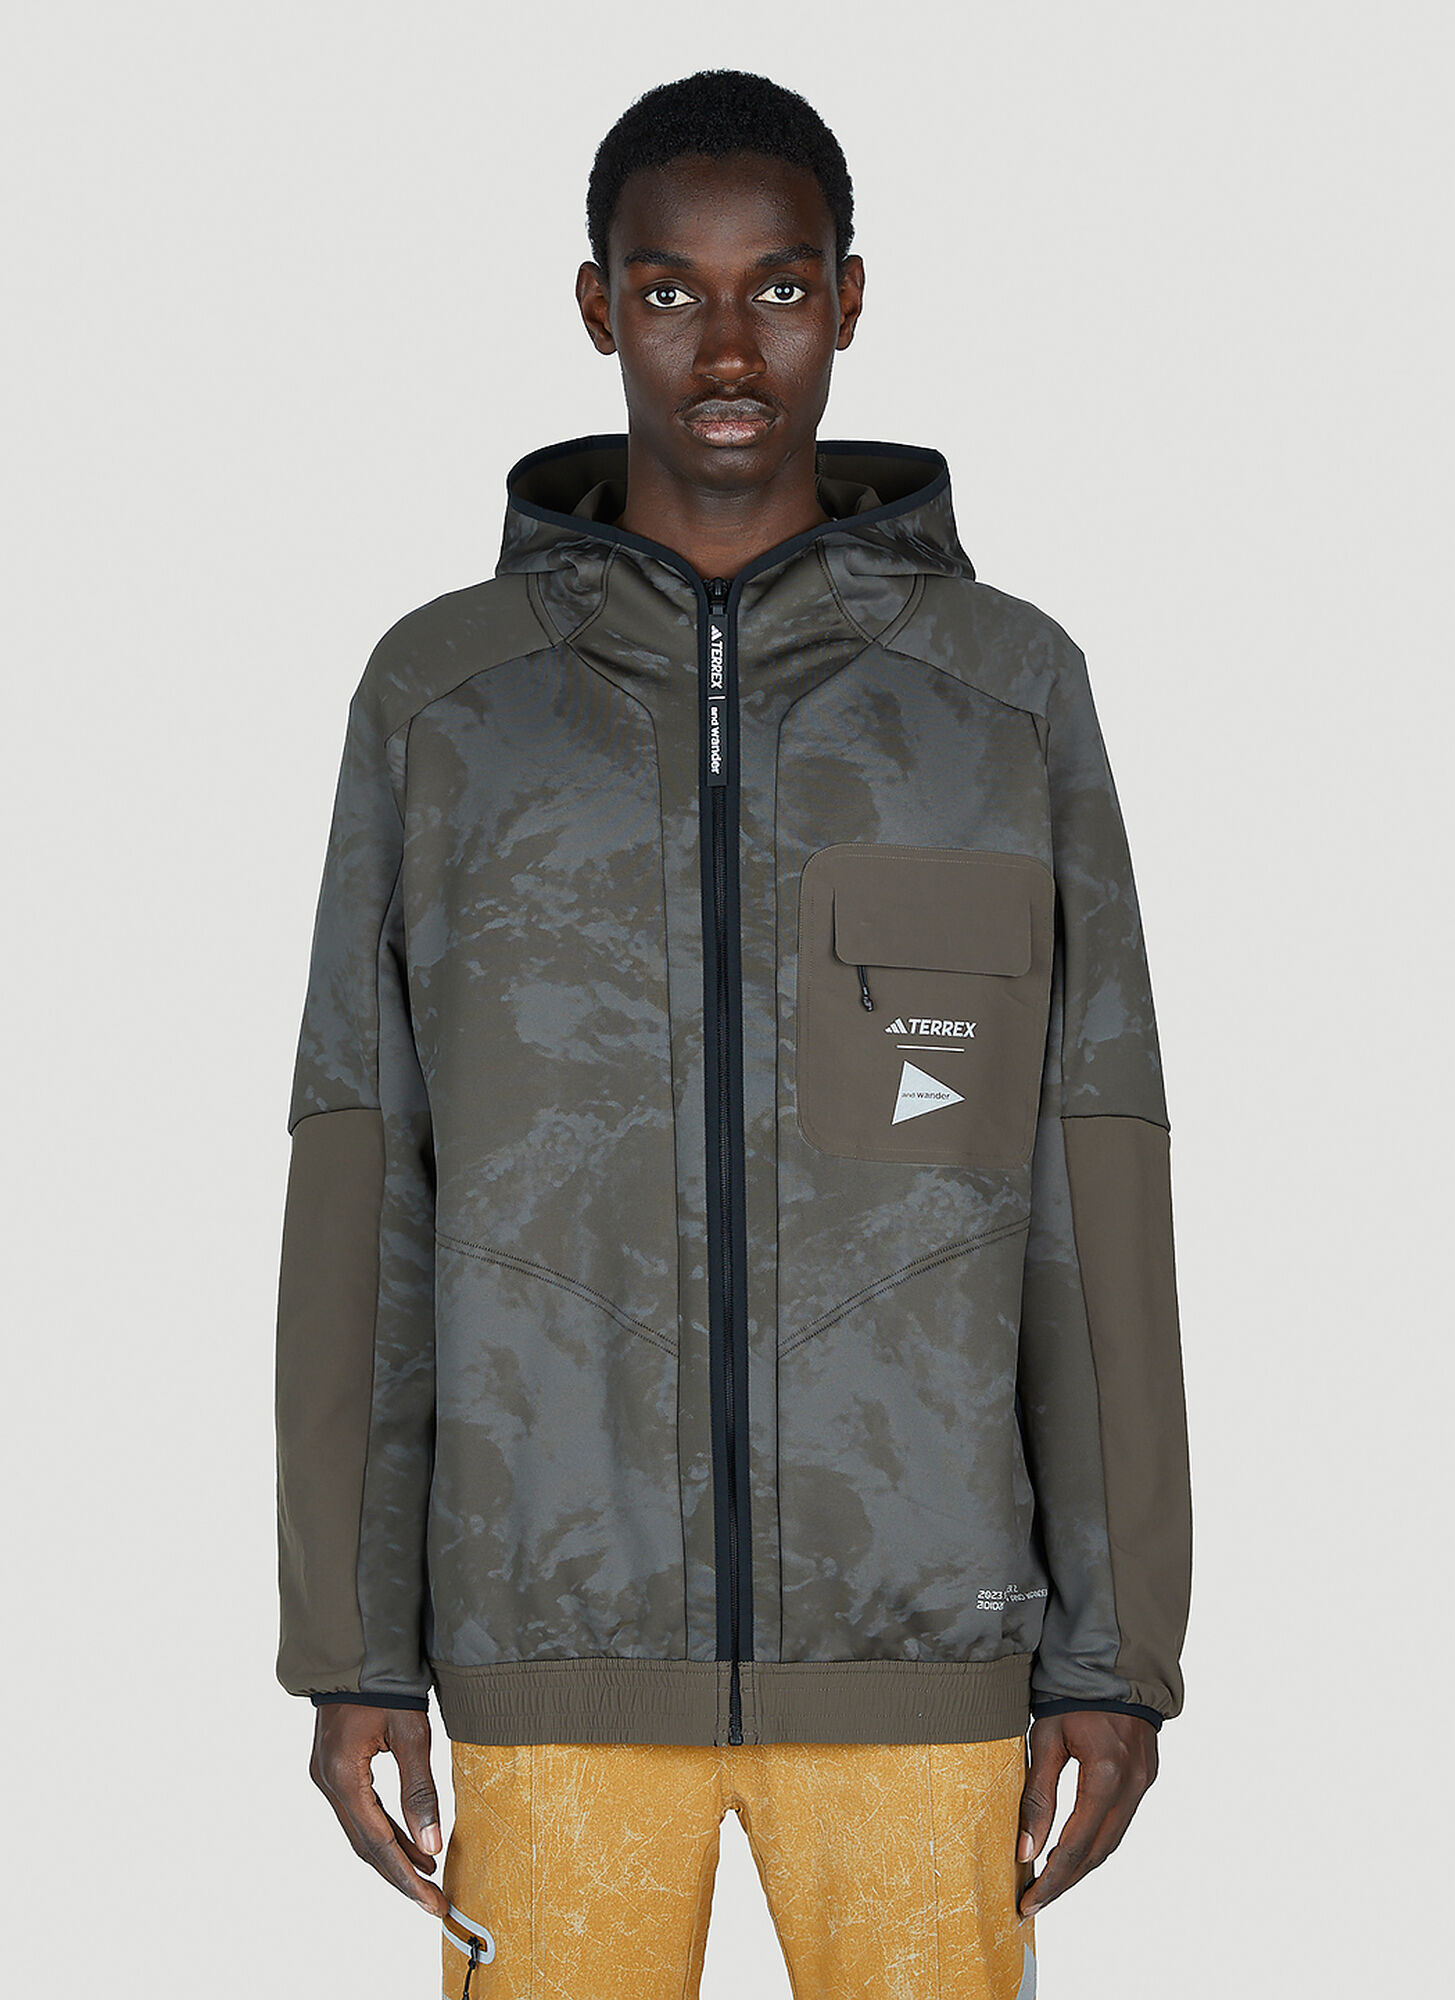 Adidas Terrex X And Wander Graphic Print Hooded Jacket Male Khaki